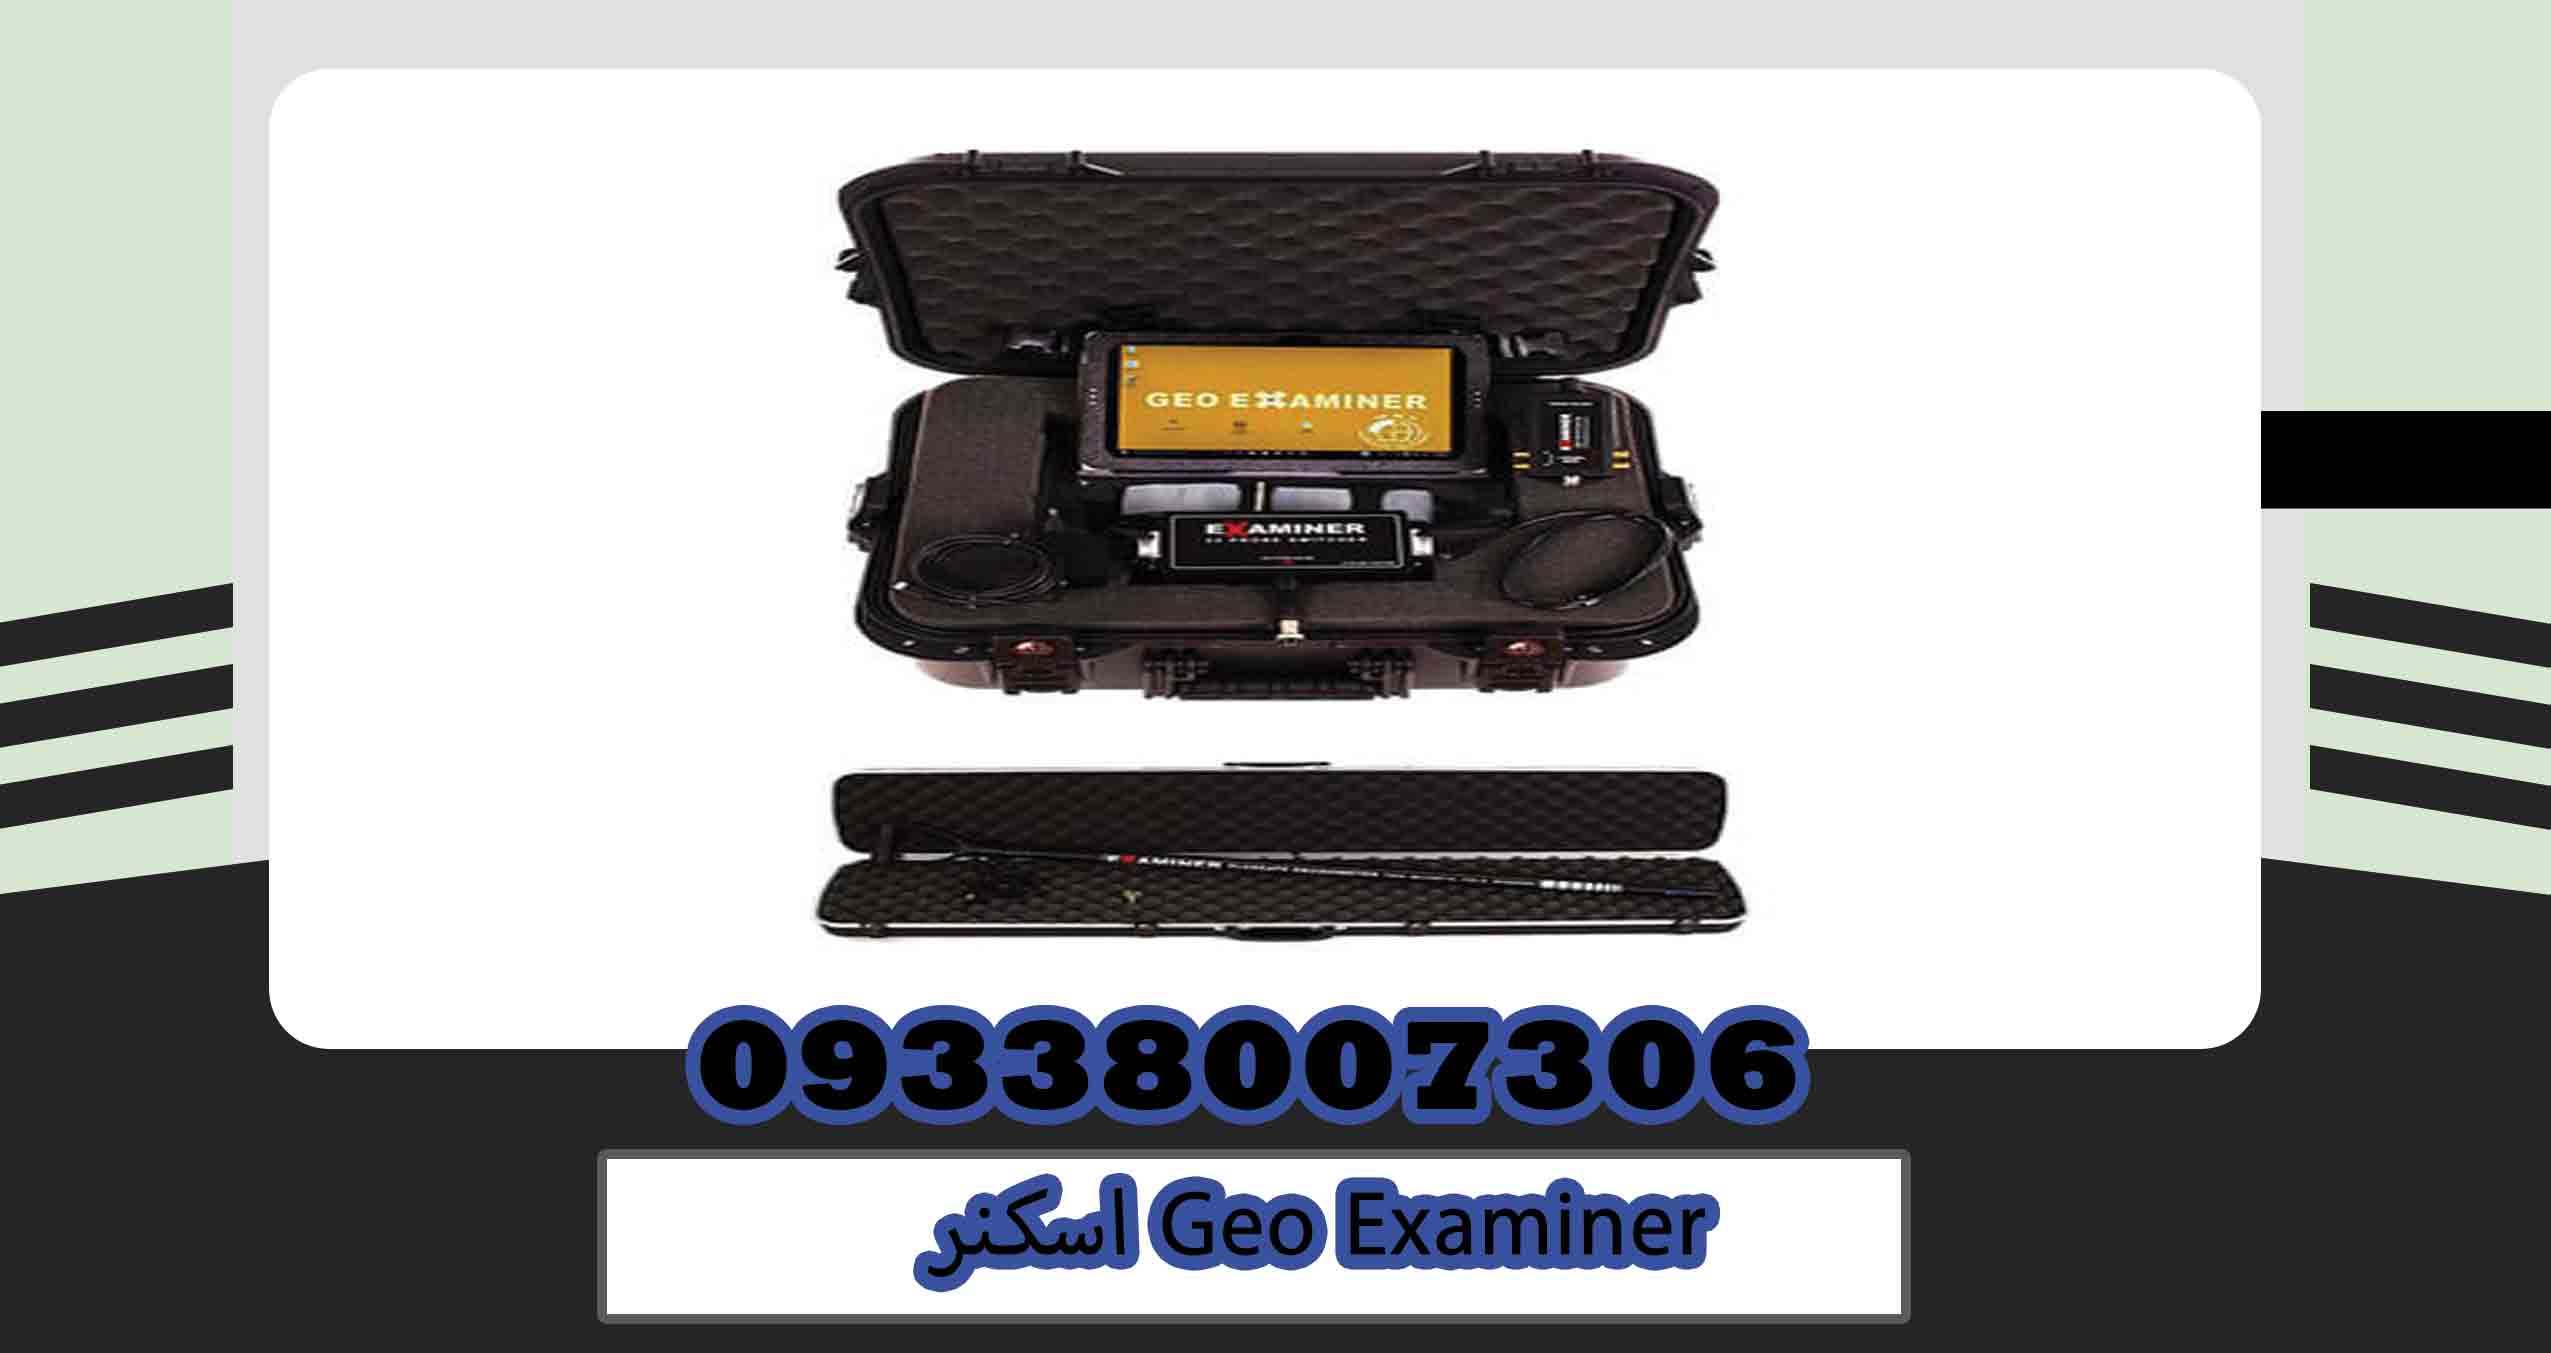 Geo Examiner